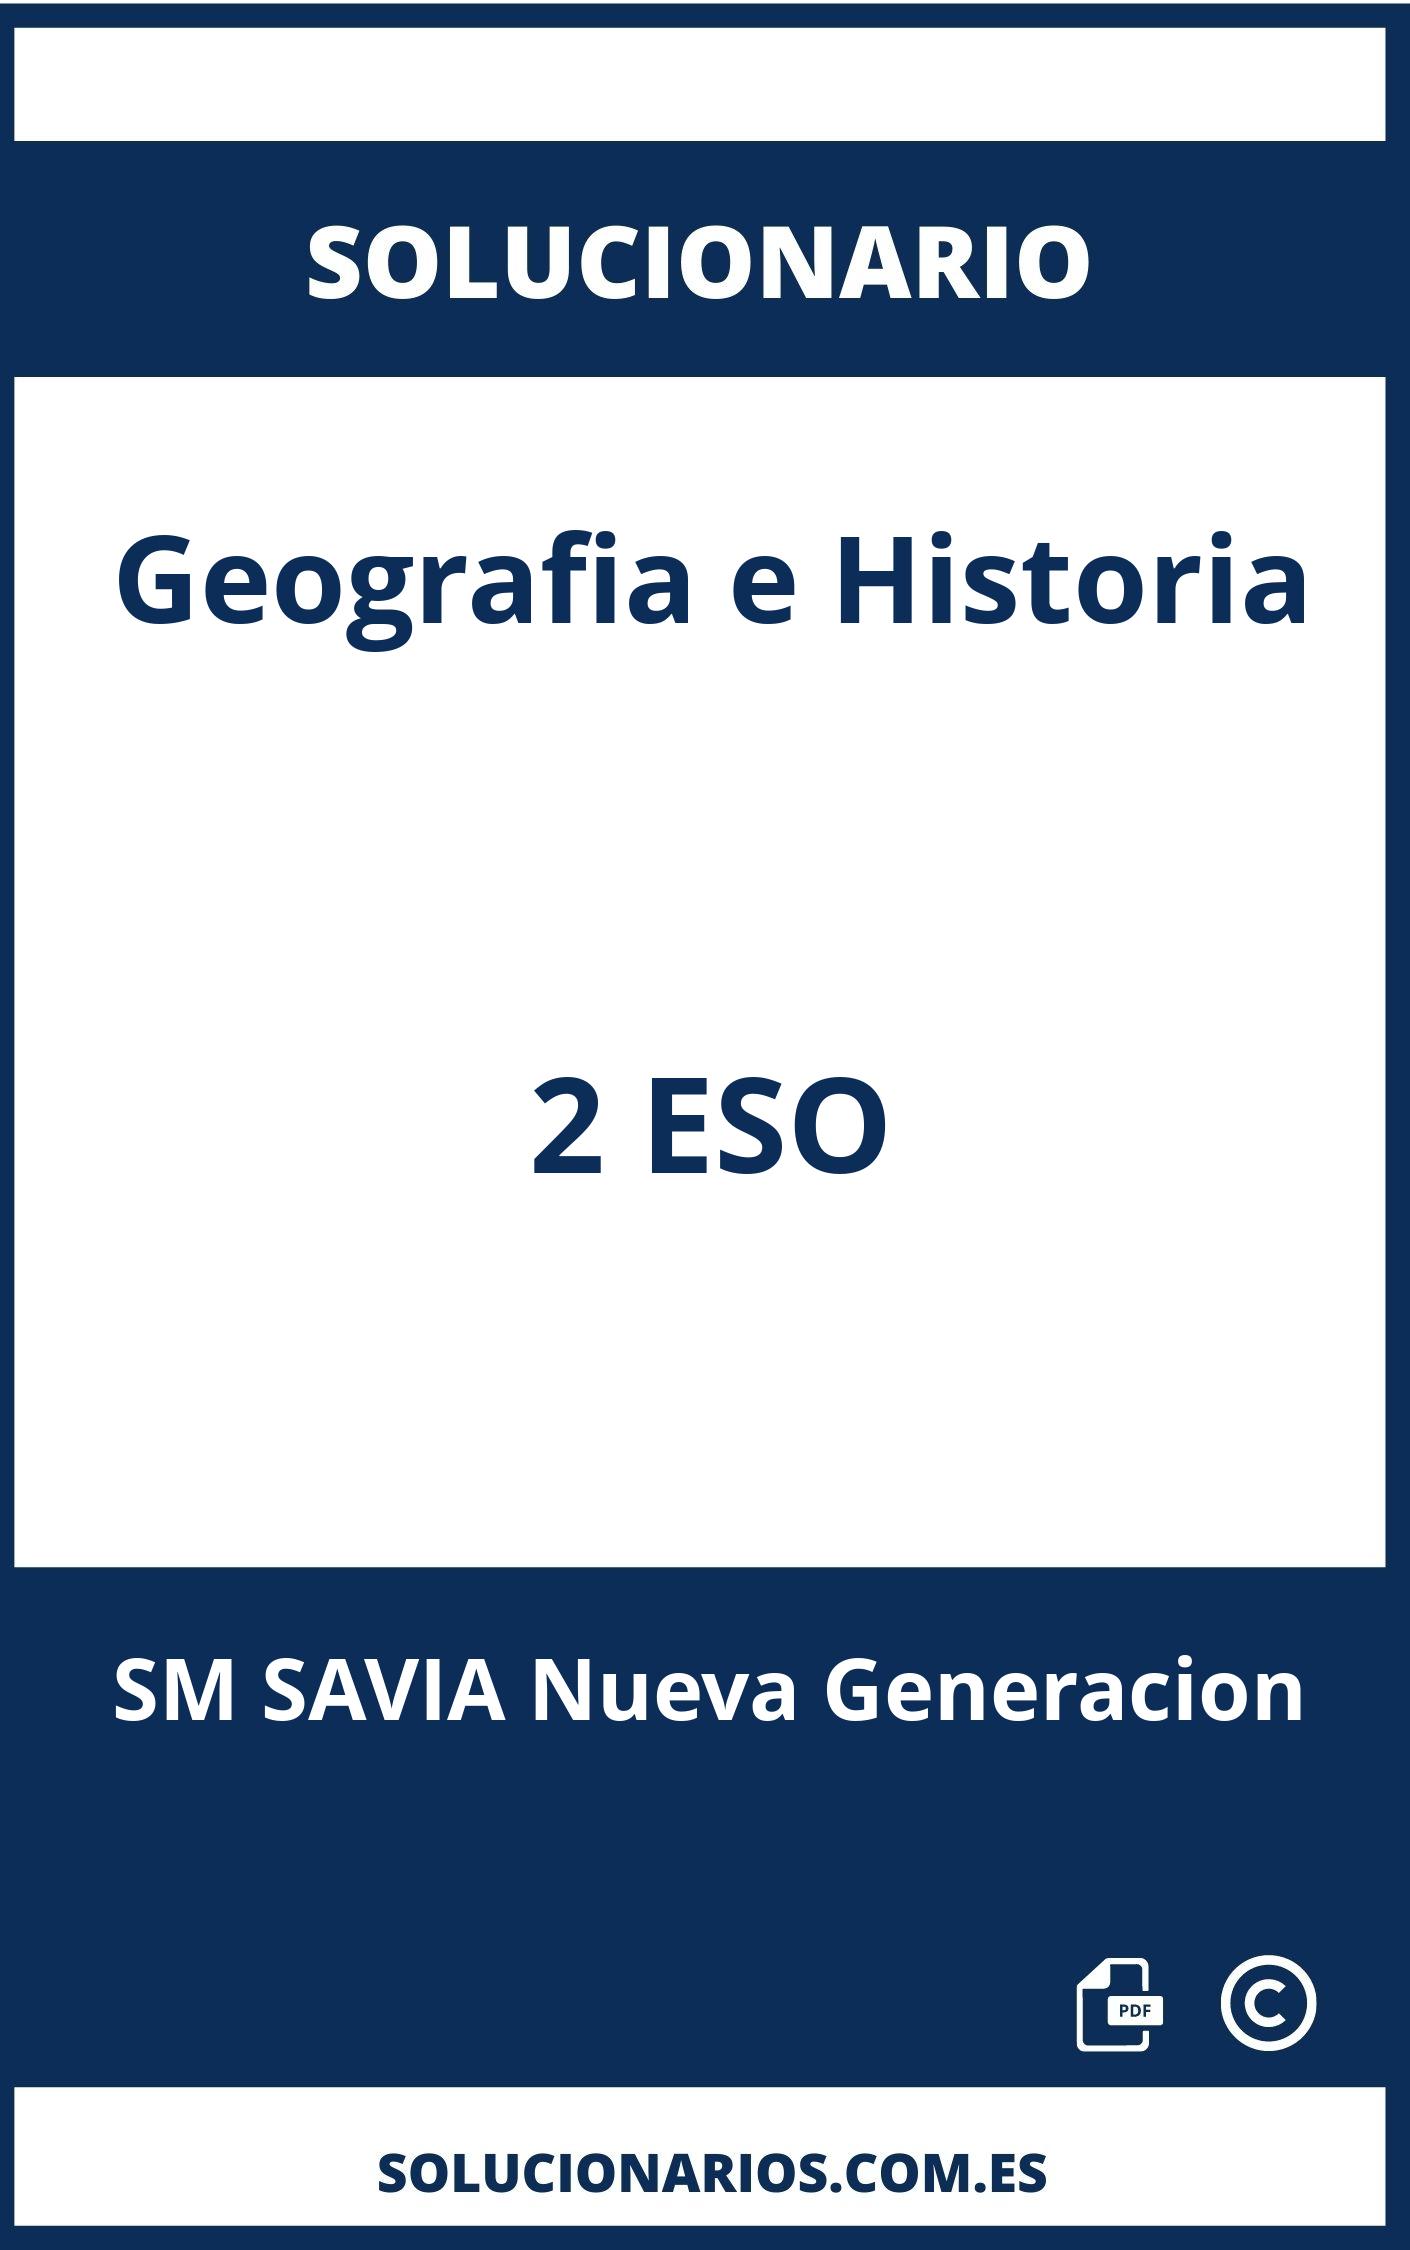 Solucionario Geografia e Historia 2 ESO SM SAVIA Nueva Generacion